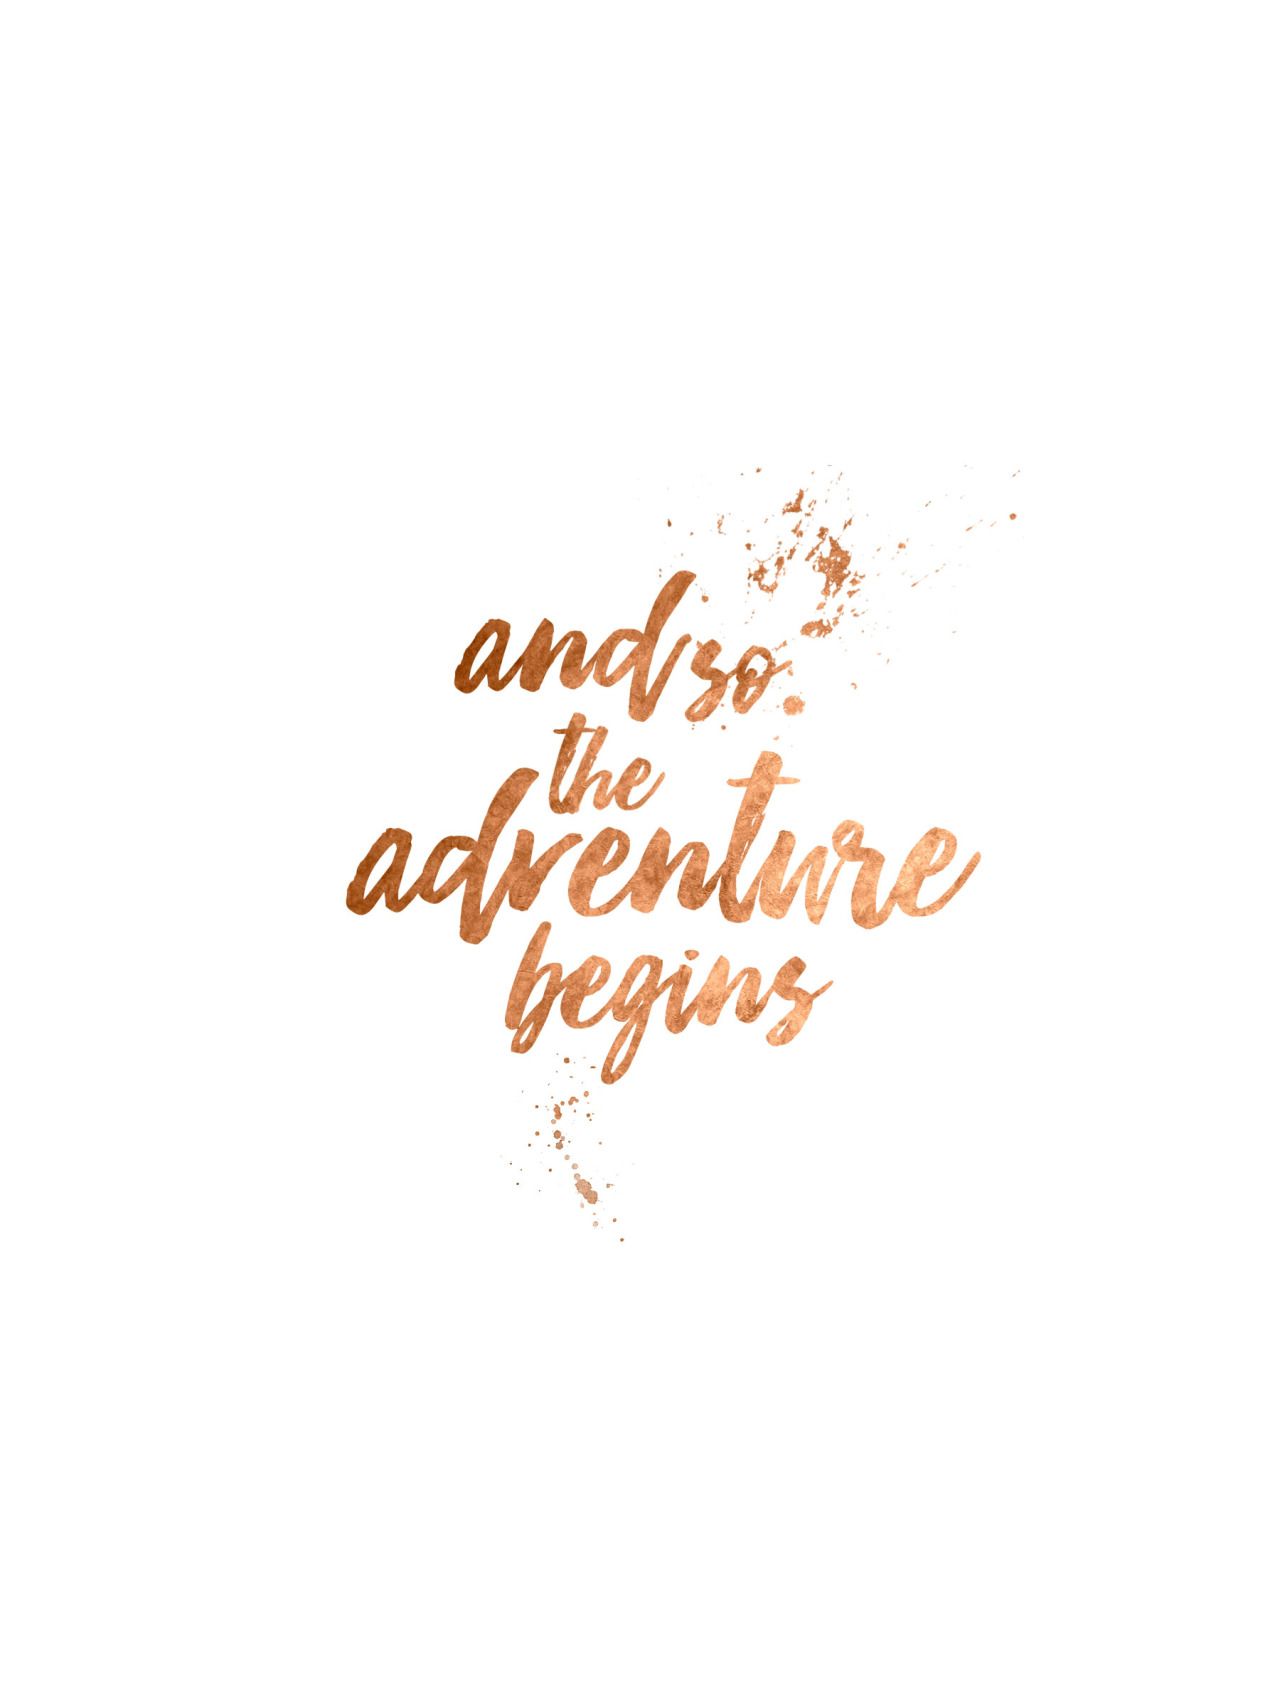 The Adventure Begins | Quotes | Pinterest | Wanderlust ...